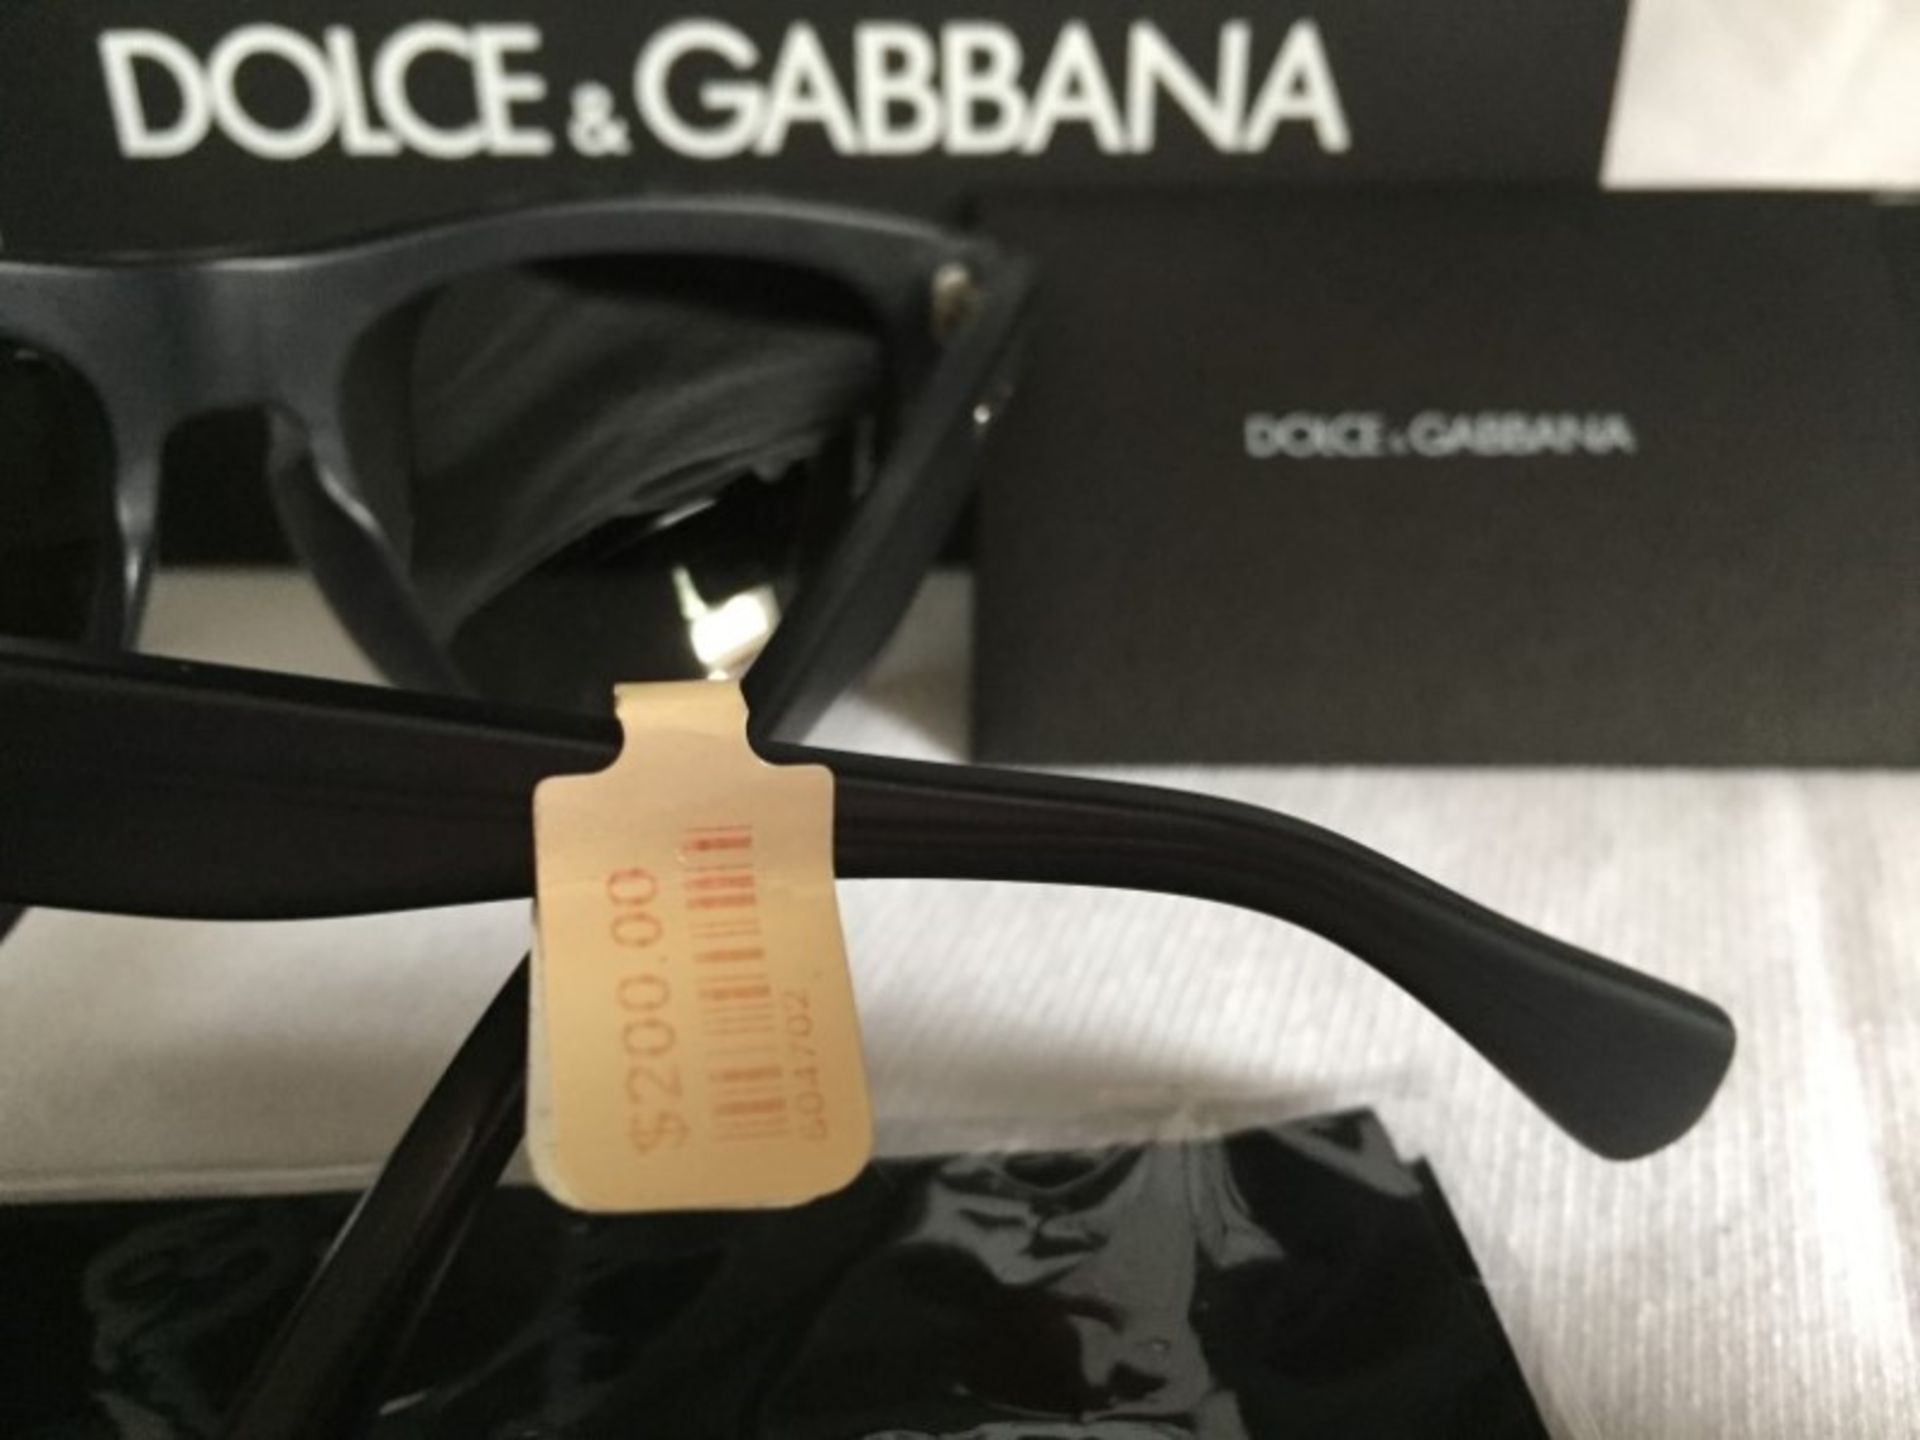 new - Dolce & Gabbana sunglasses - Image 3 of 3